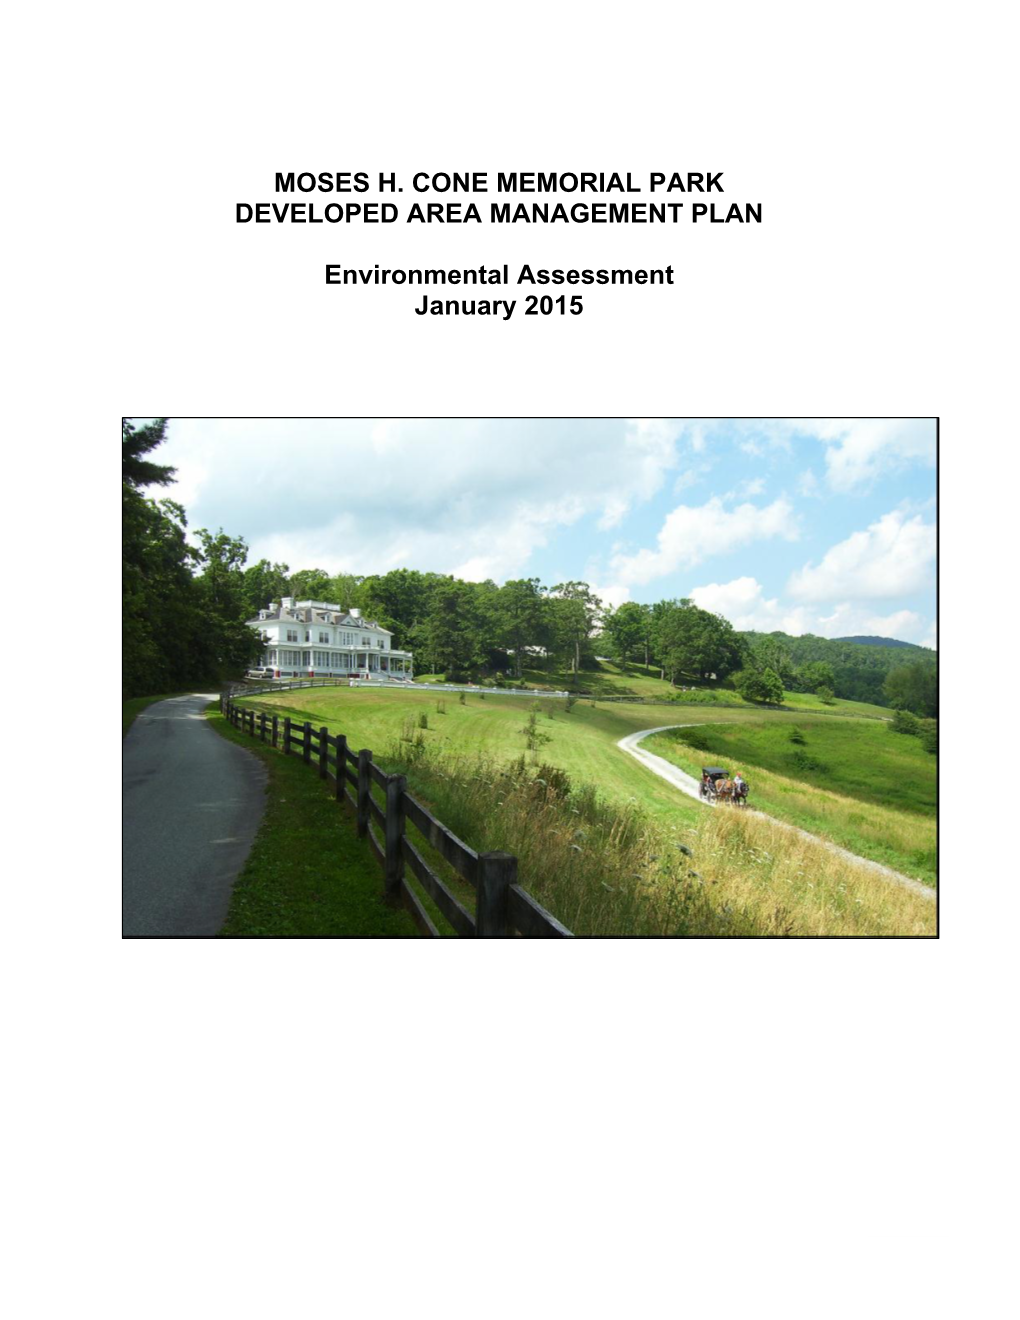 Moses H. Cone Memorial Park Developed Area Management Plan